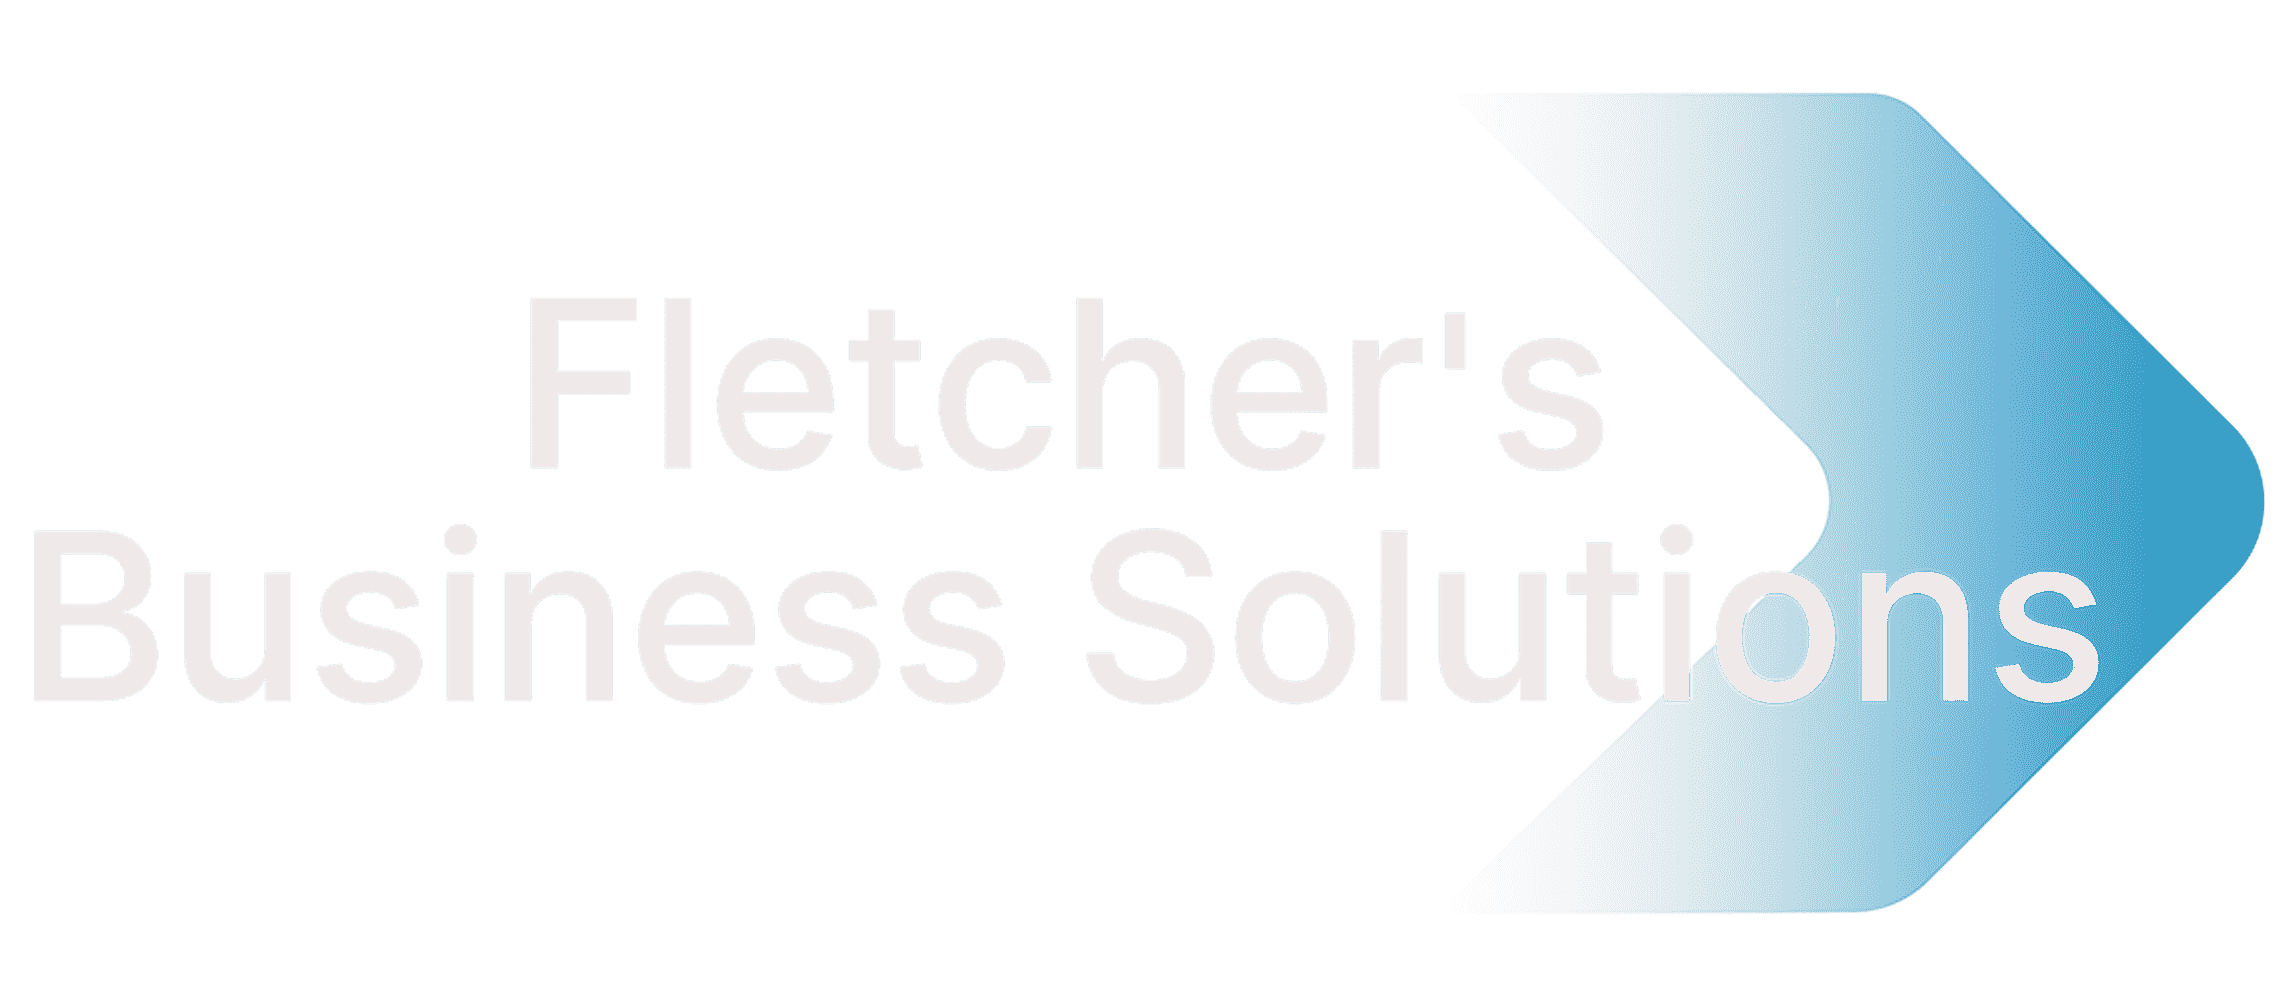 Fletcher's Business Solutions logo